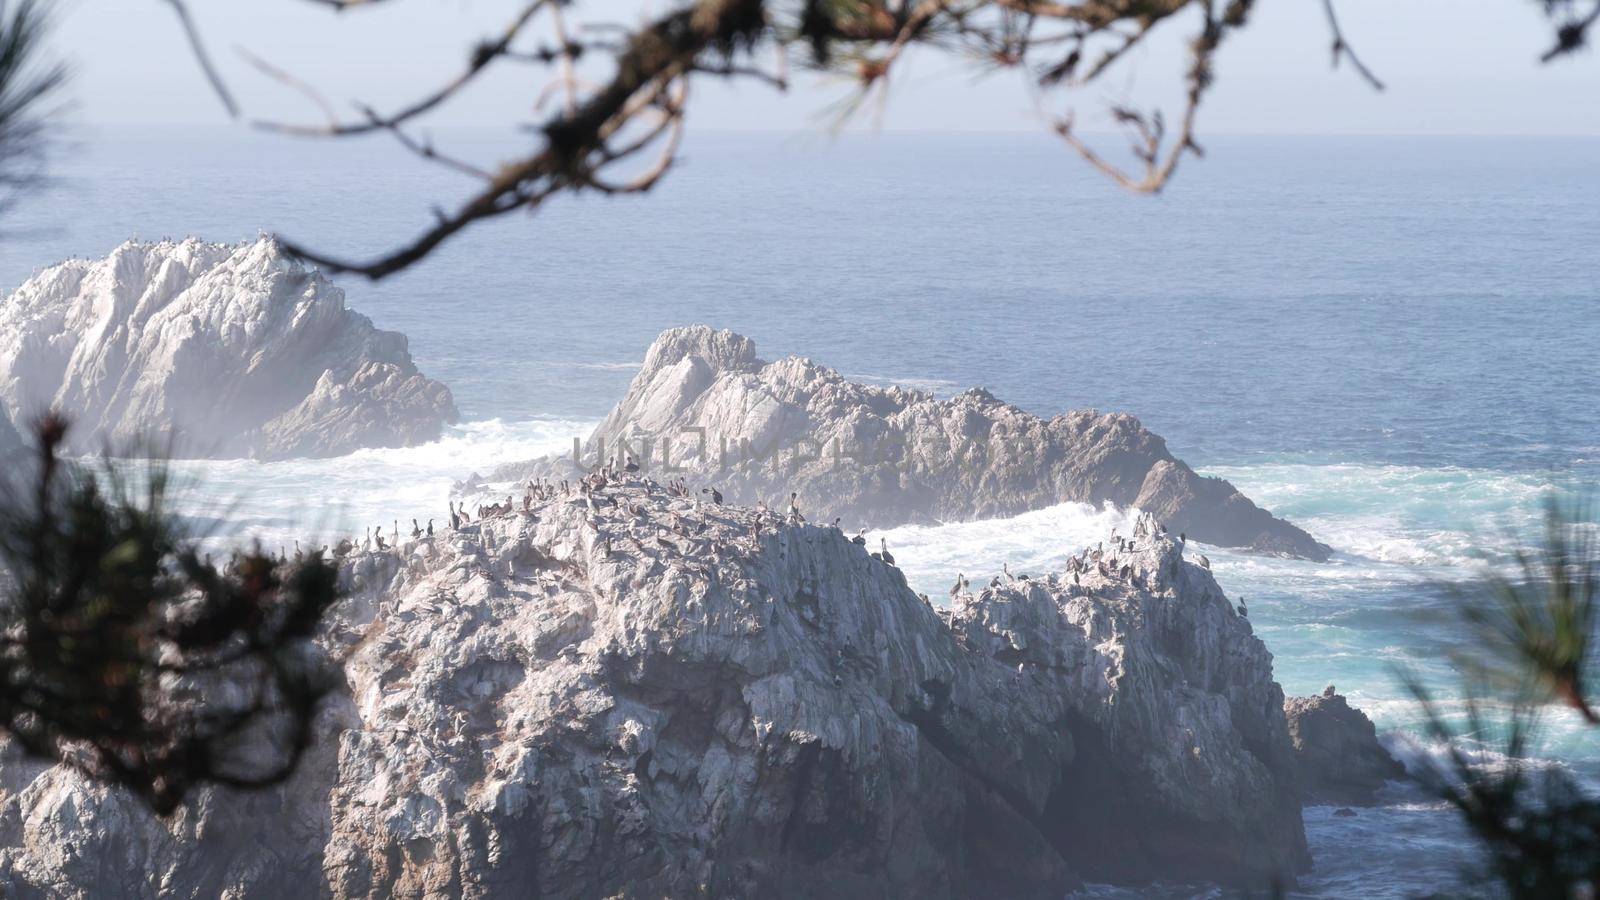 Flock of brown pelicans on cliff, rocky island in ocean, Point Lobos landscape, Monterey wildlife, California coast, USA. Big waves crashing, birds flying. Many pelecanus nesting, wild animals colony.